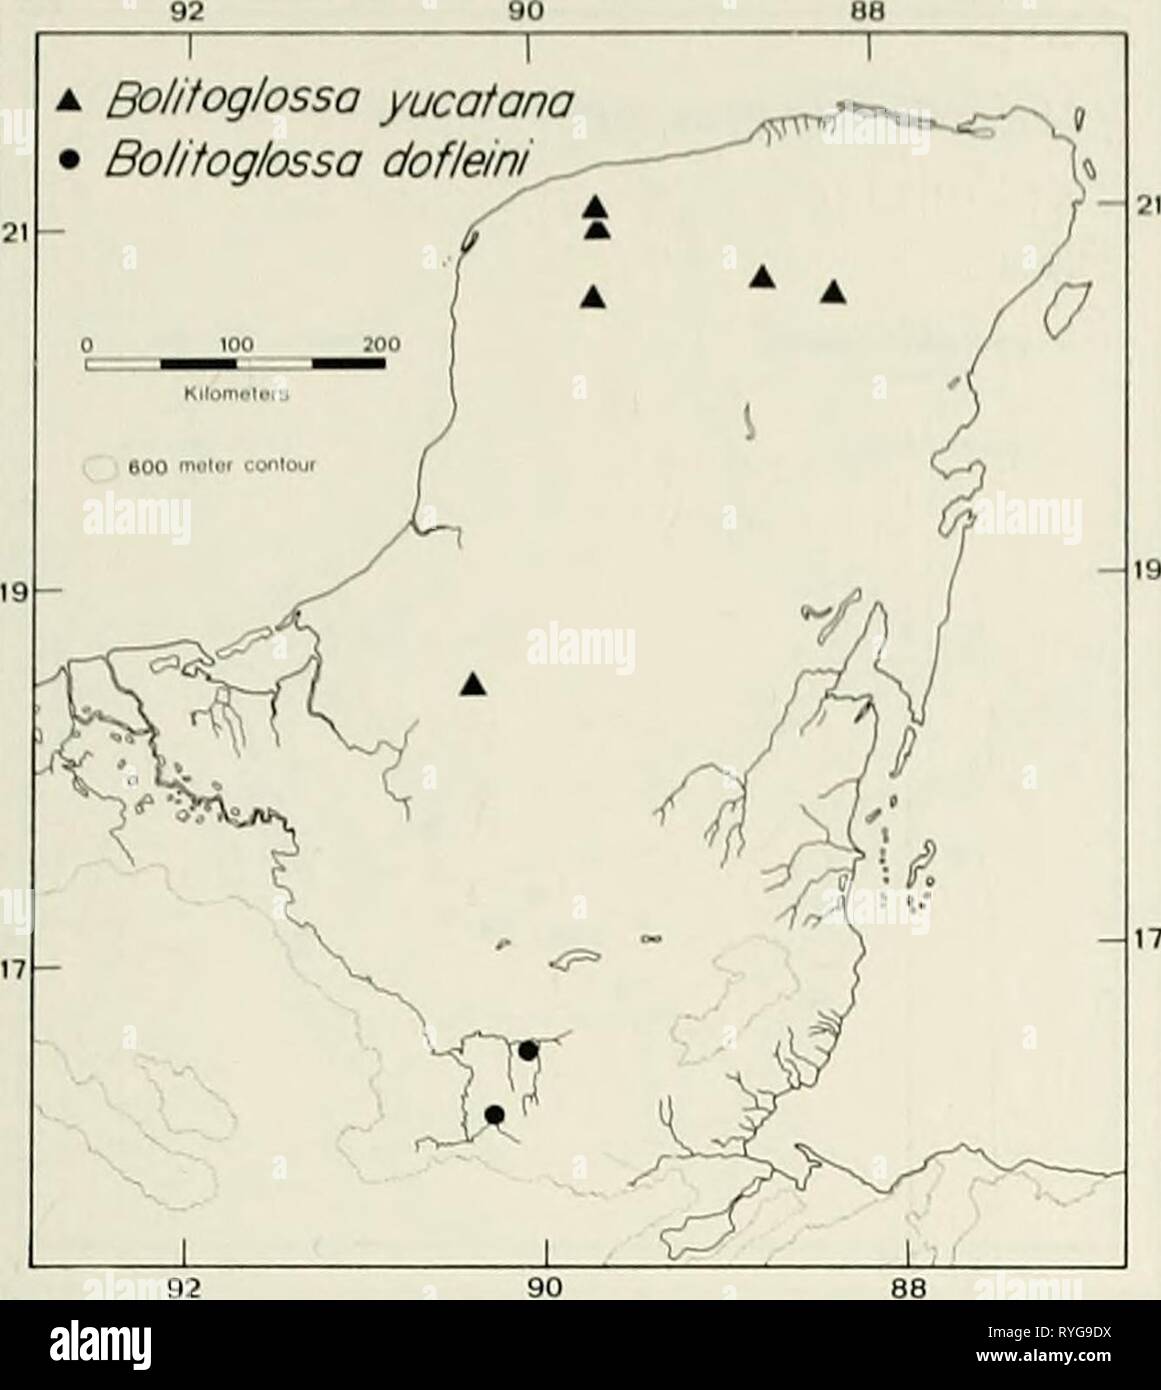 An ecogeographic analysis of the herpetofauna of the Yucatan Peninsula  ecogeographicana00leej Year: 1980  YUCATAN HERPETOFAUNA 49 A Bolitoglossa yucatana â¢ Bolitoglossa dofleini      Bolitoglossa 1 rufescens 1 T ' Tzl- )  } /. - ^^ / P J - J^V Y / 7^ / ^^^ Â«?kÂ«s S / ^ ^' â â¢ ^ '&gt;'^ U â¢ c^ : â¢.â¢â¢ ^.^   1 1 Rhinophrynus dorsalis 1 --x*   /^ â¢ V Â° â¢*Â» '( /o j â¢  f y^ â¢ /   -f^^^^^'' ' ^ Ij ^zy**^Y ; j^'^WlSJtts 1 -( ' S * ^=W' ;^ 1 â^  Stock Photo